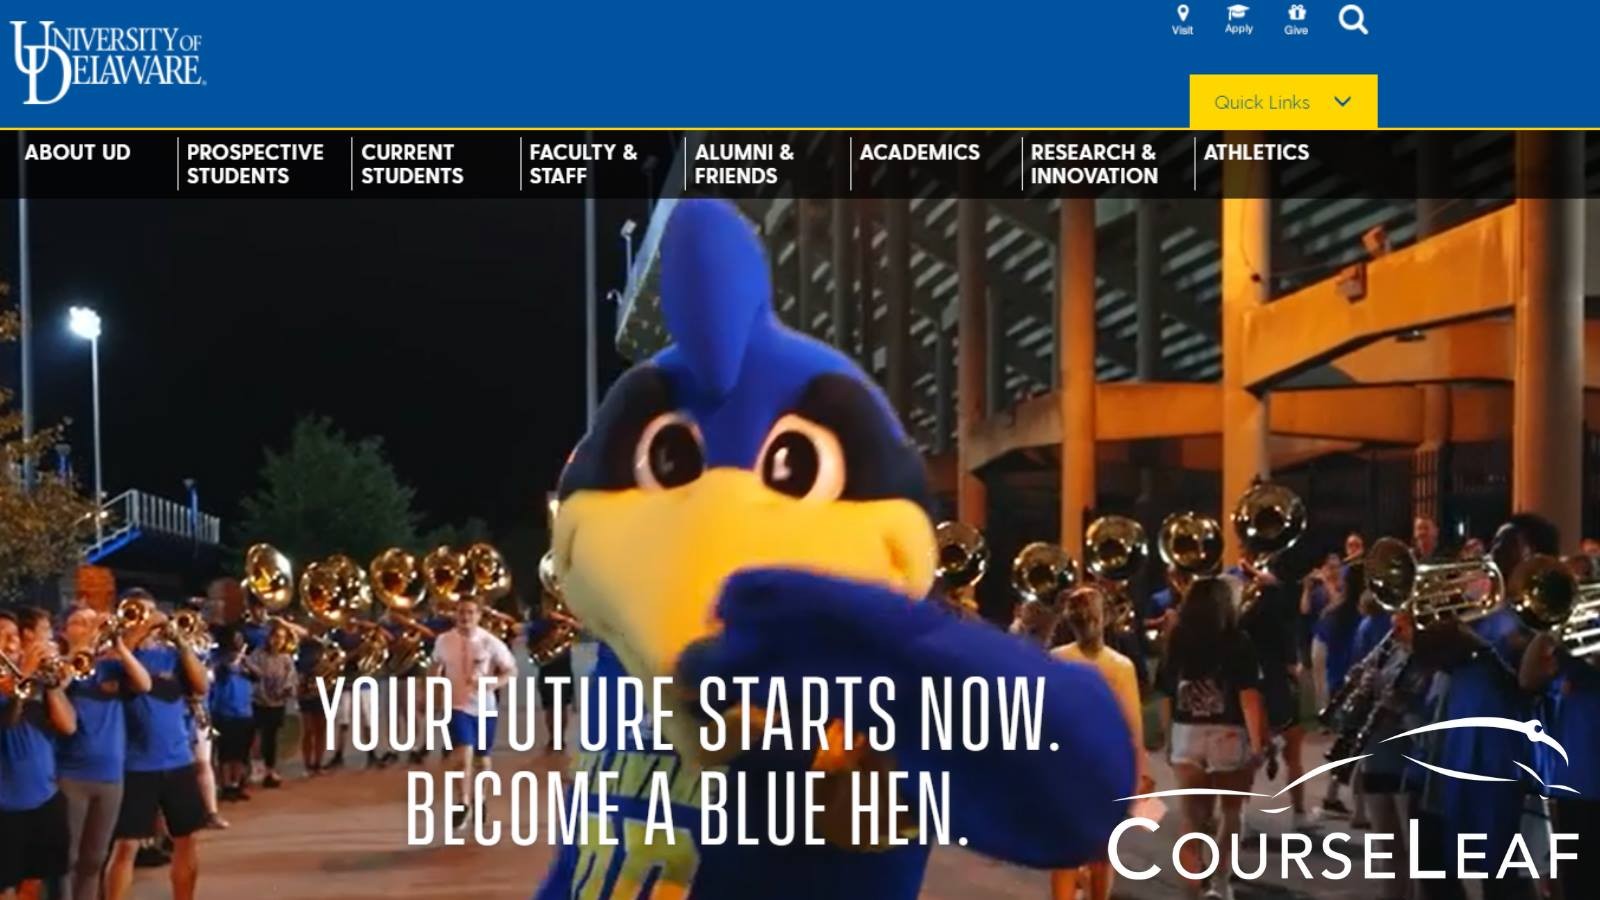 University of Delaware CourseLeaf catalog homepage